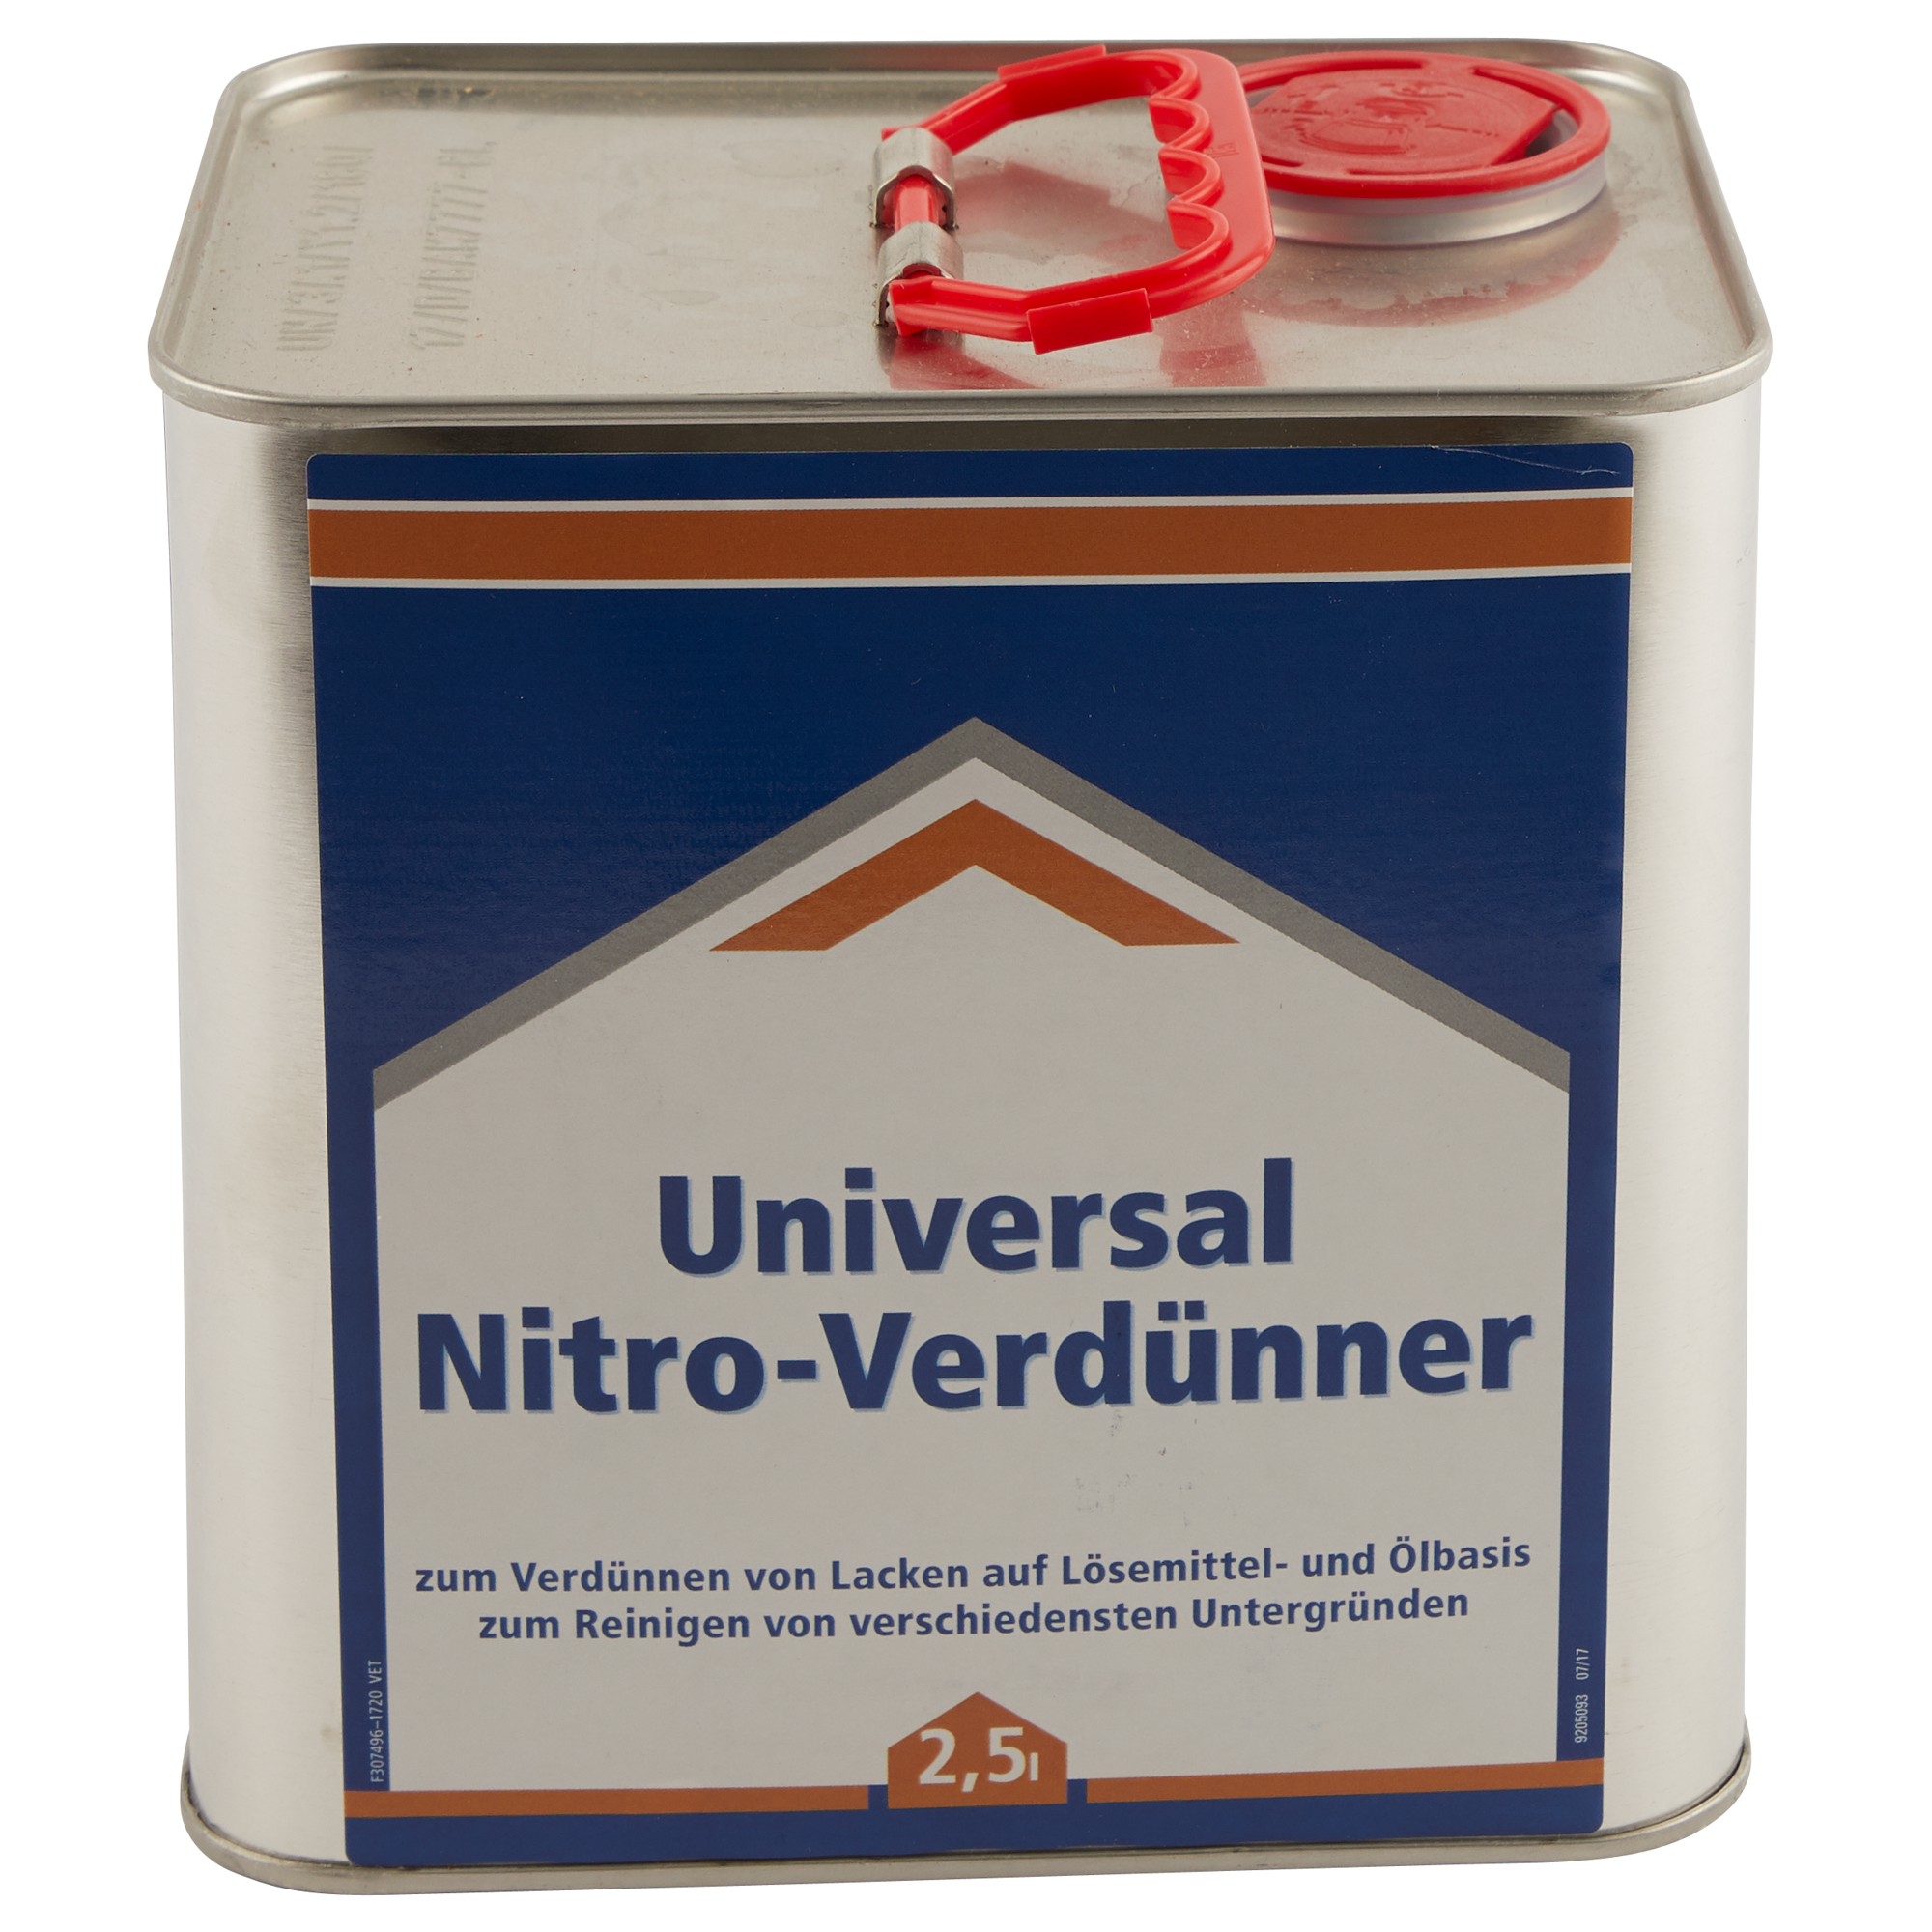 Universal Nitro-Verdünner 2,5 l + product picture